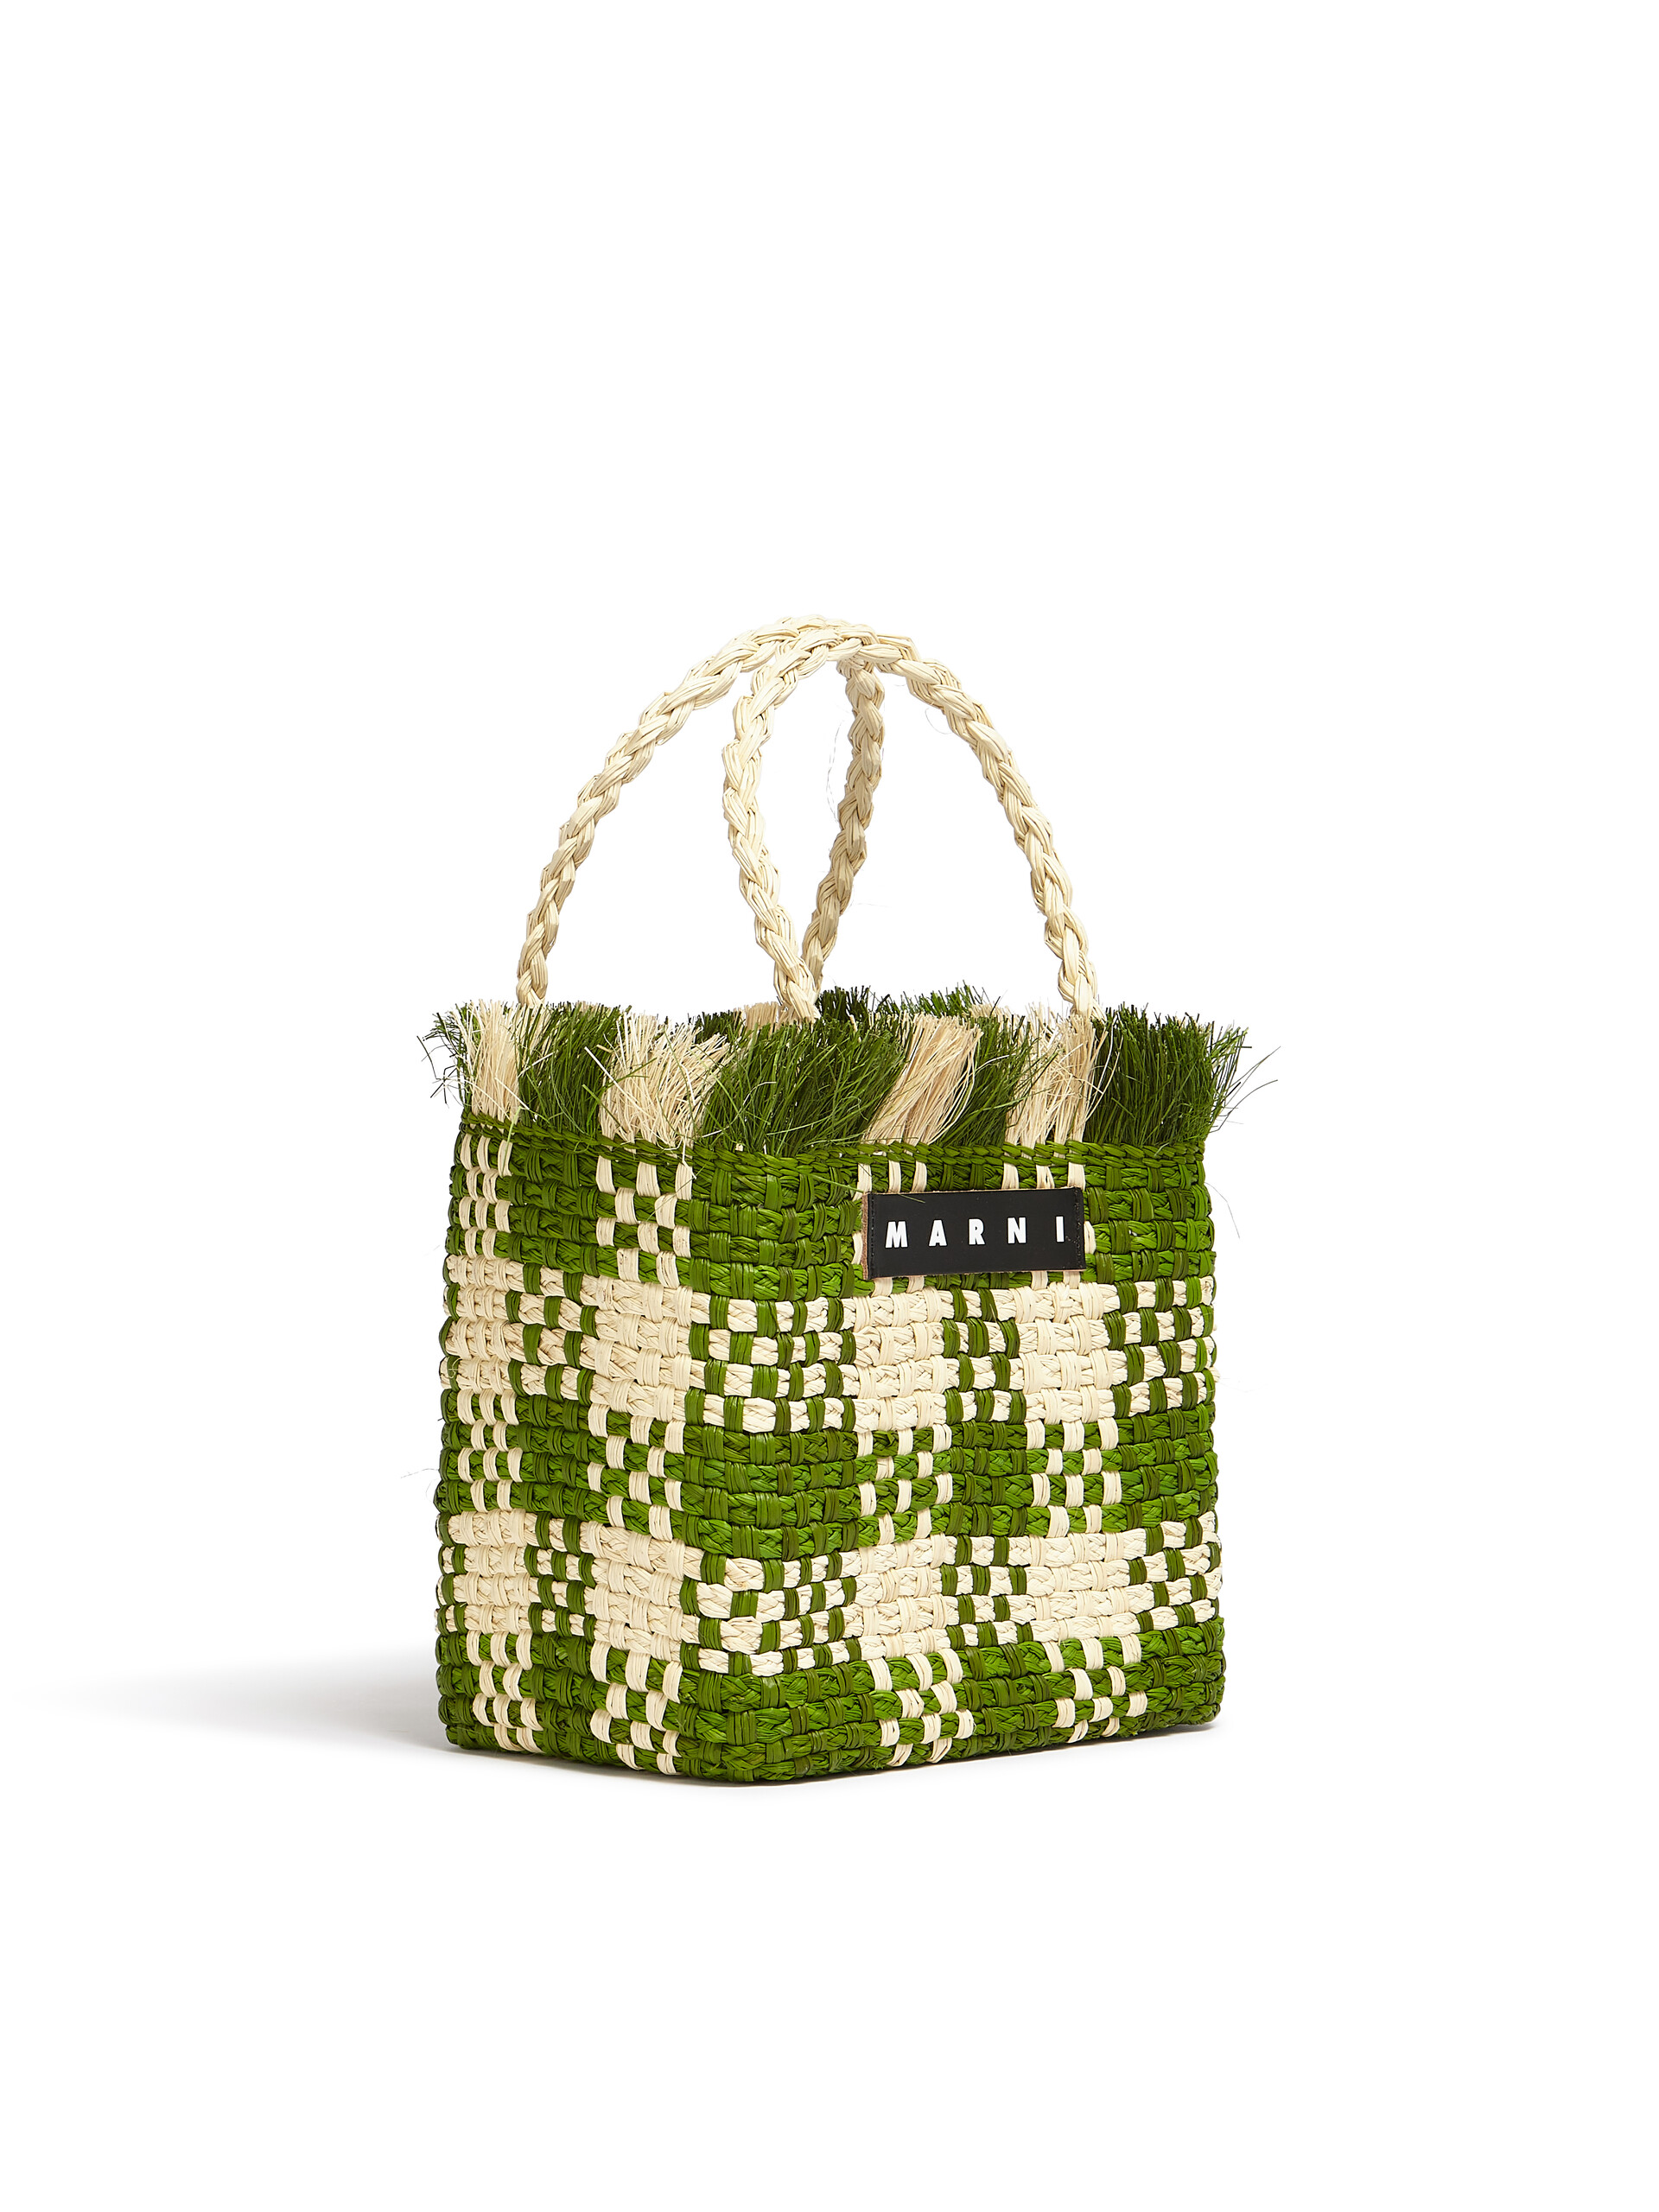 MARNI MARKET SUNSET small bag in green natural fiber - Shopping Bags - Image 2